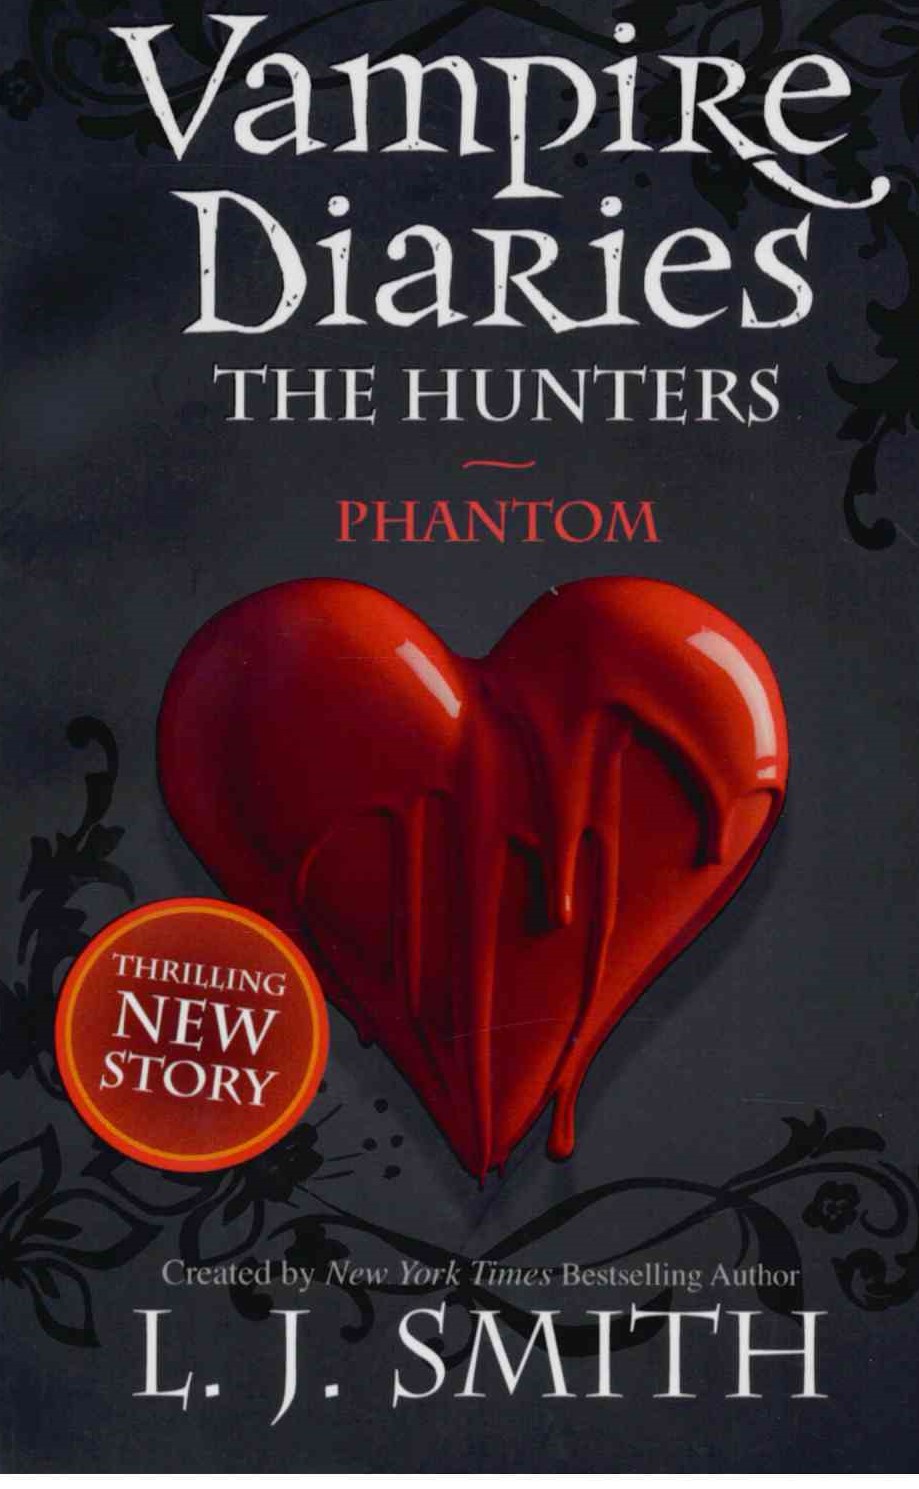 The Vampire Diaries: The Hunters. Phantom